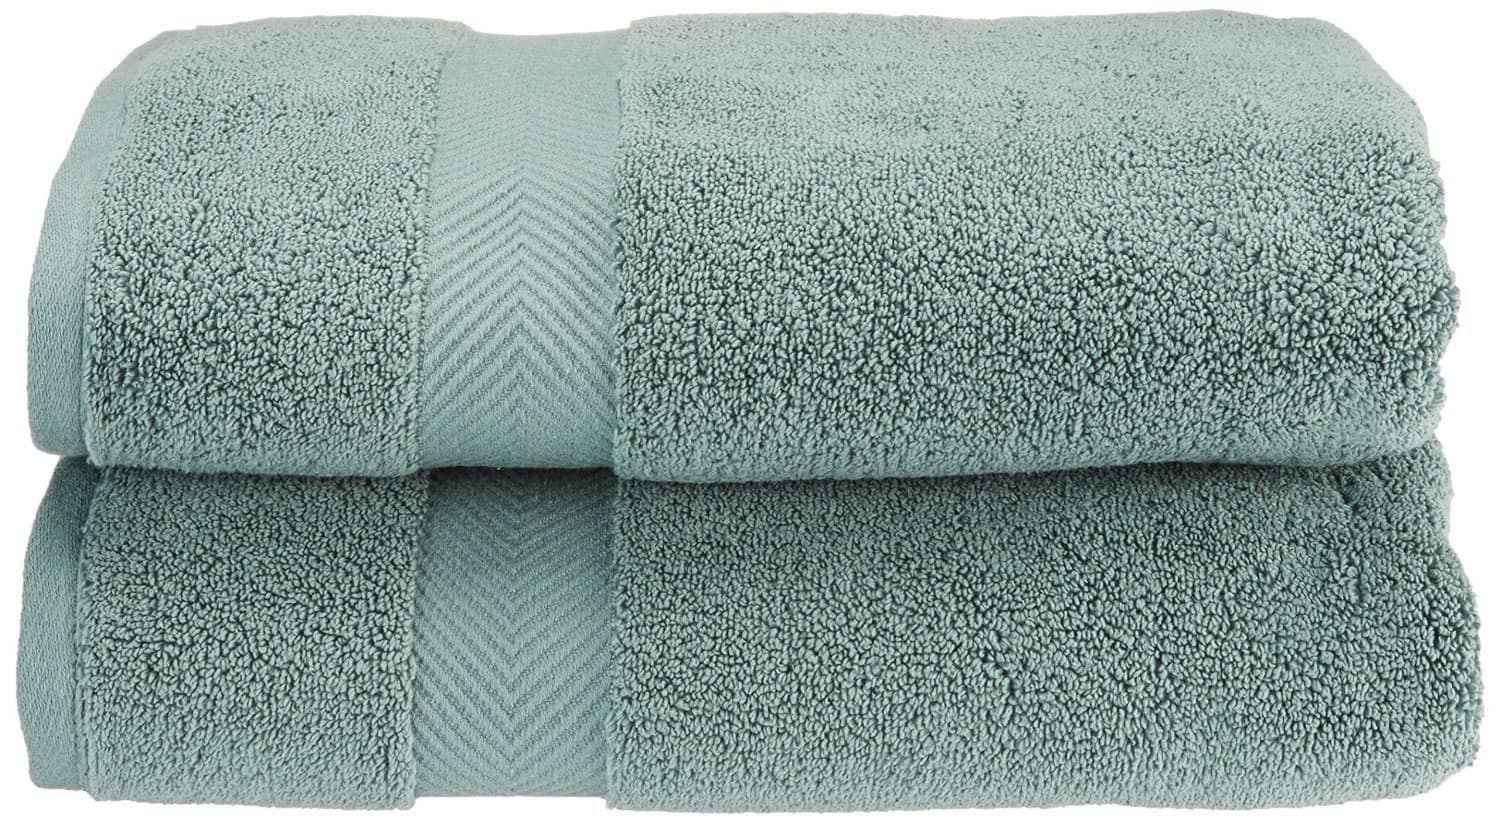 550 GSM Plush Machine Washable Royal Ascot 100% Zero Twist Cotton Towel Set 2 pc Set- 2 Large Bath Sheets Absorbent Softer Than a Cloud SPA Towels